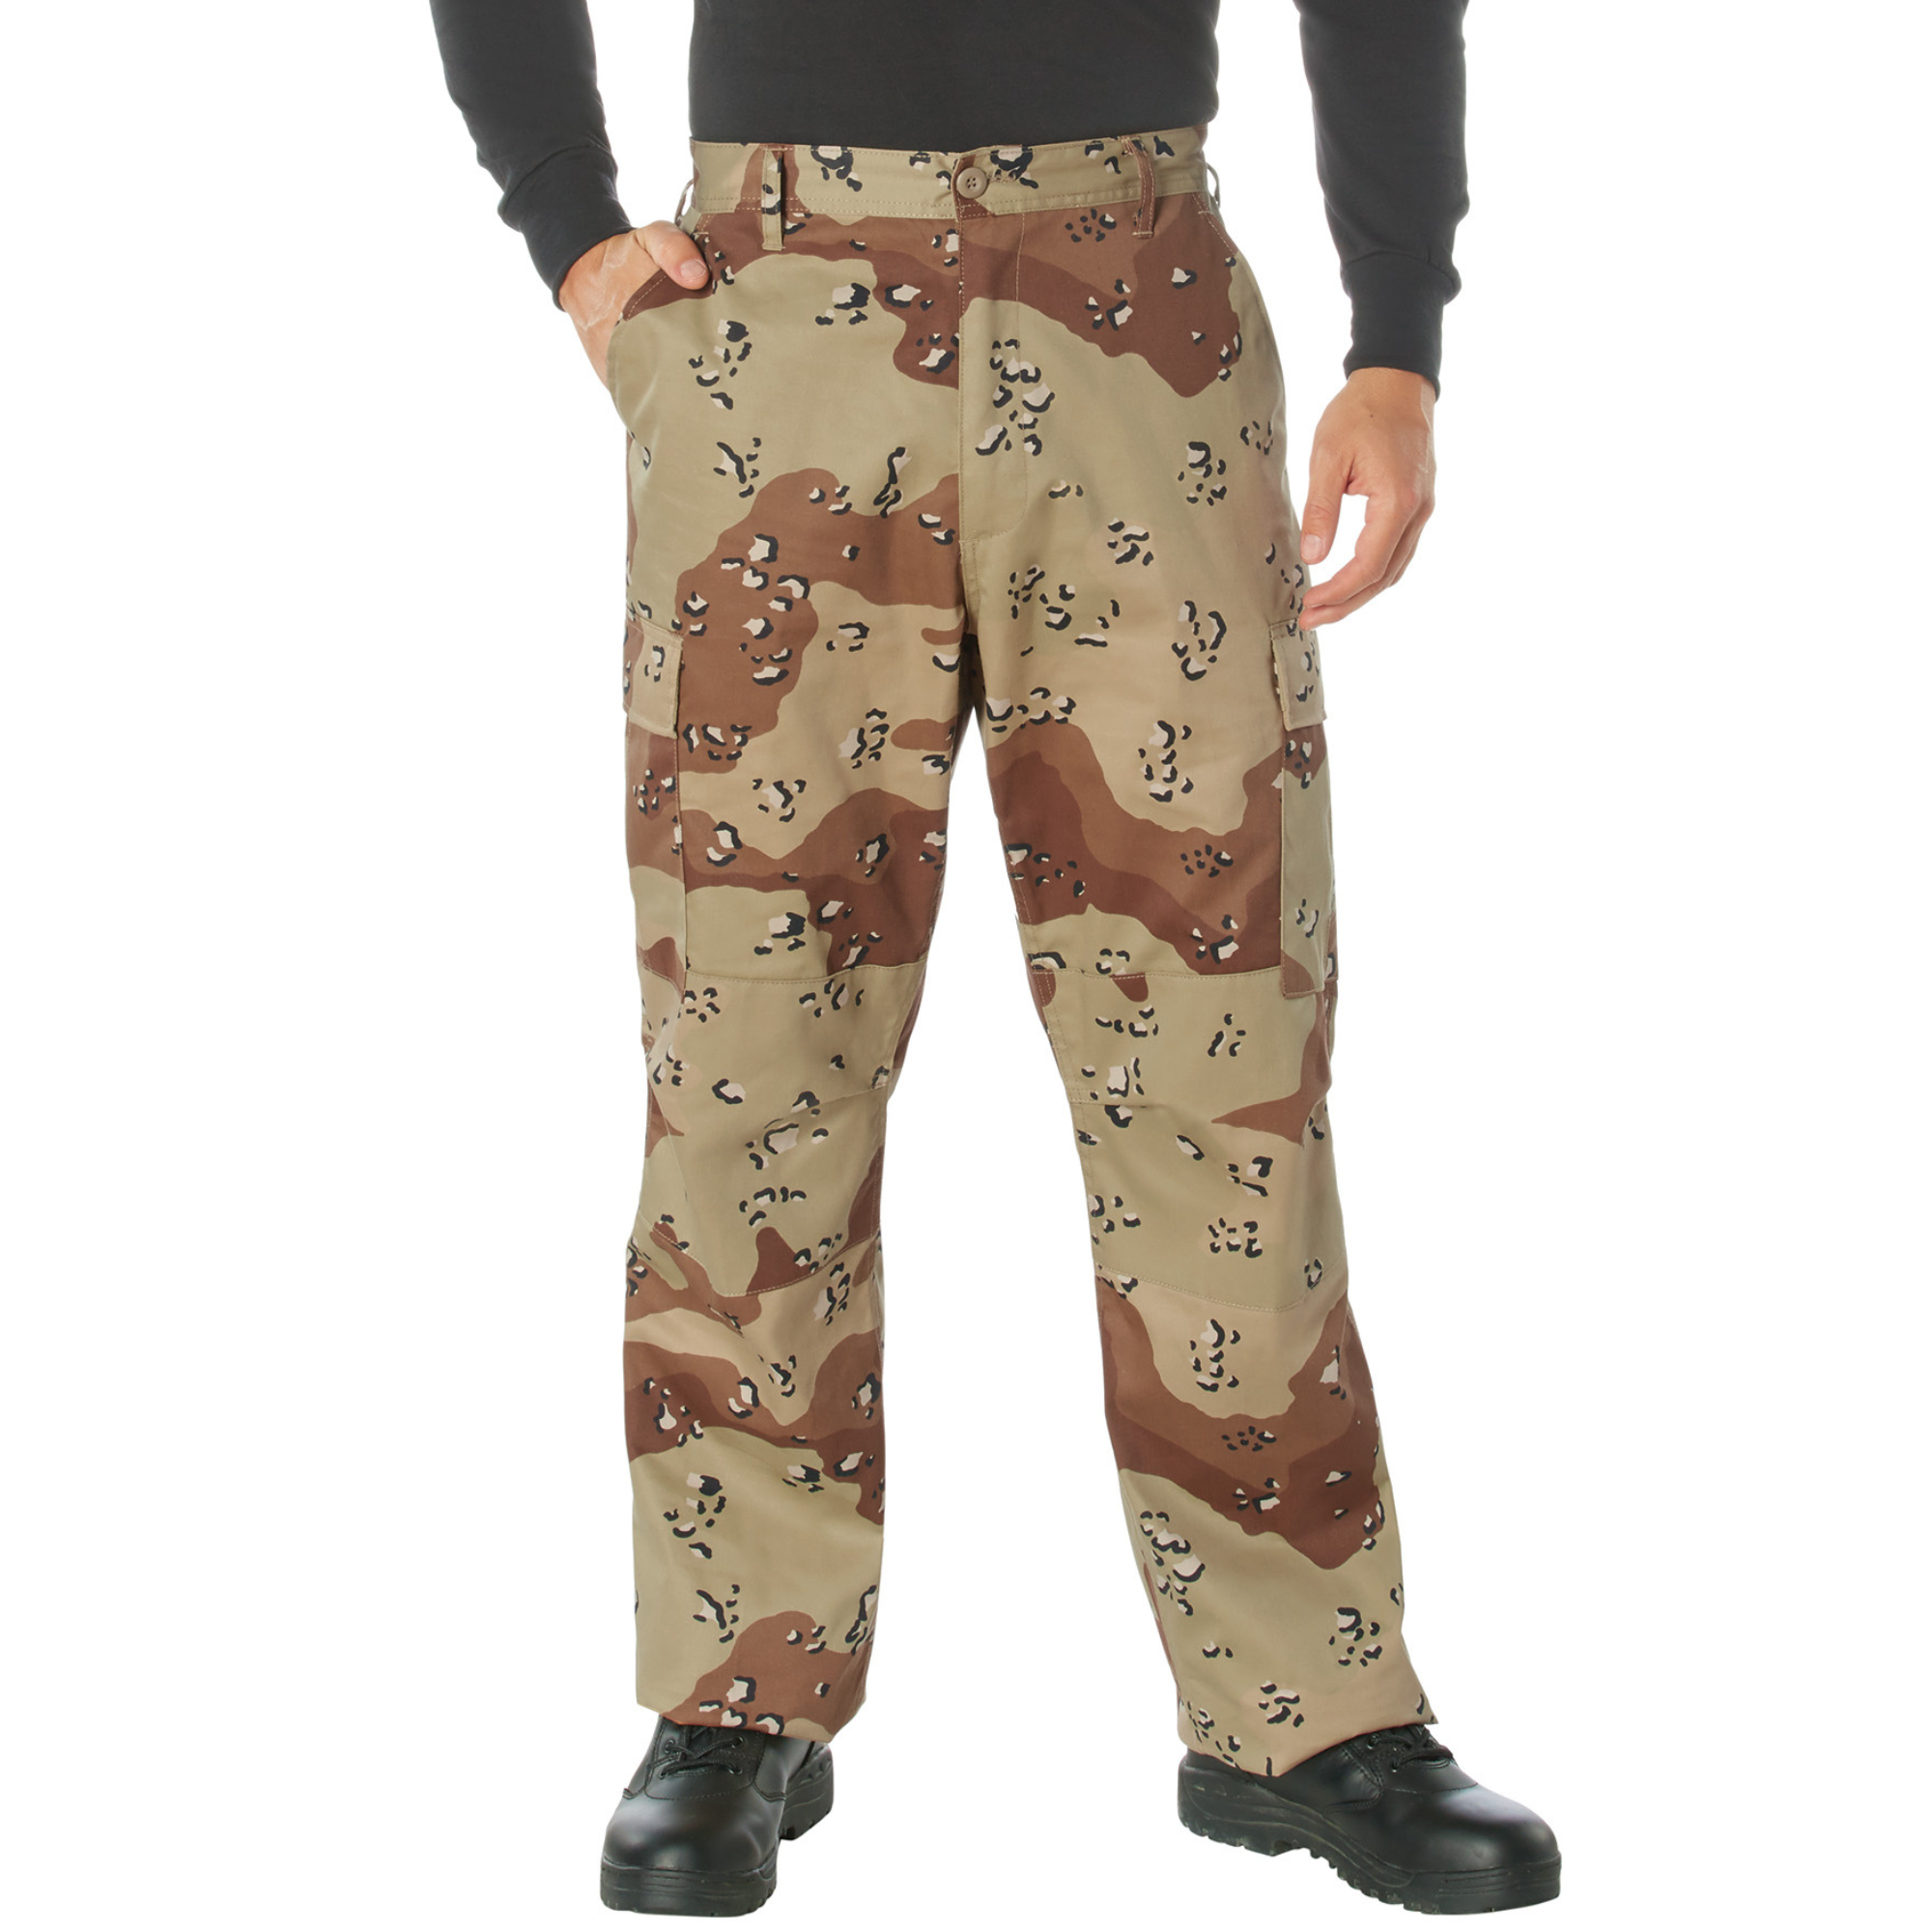 6 Color Desert Camo Tactical BDU Pants